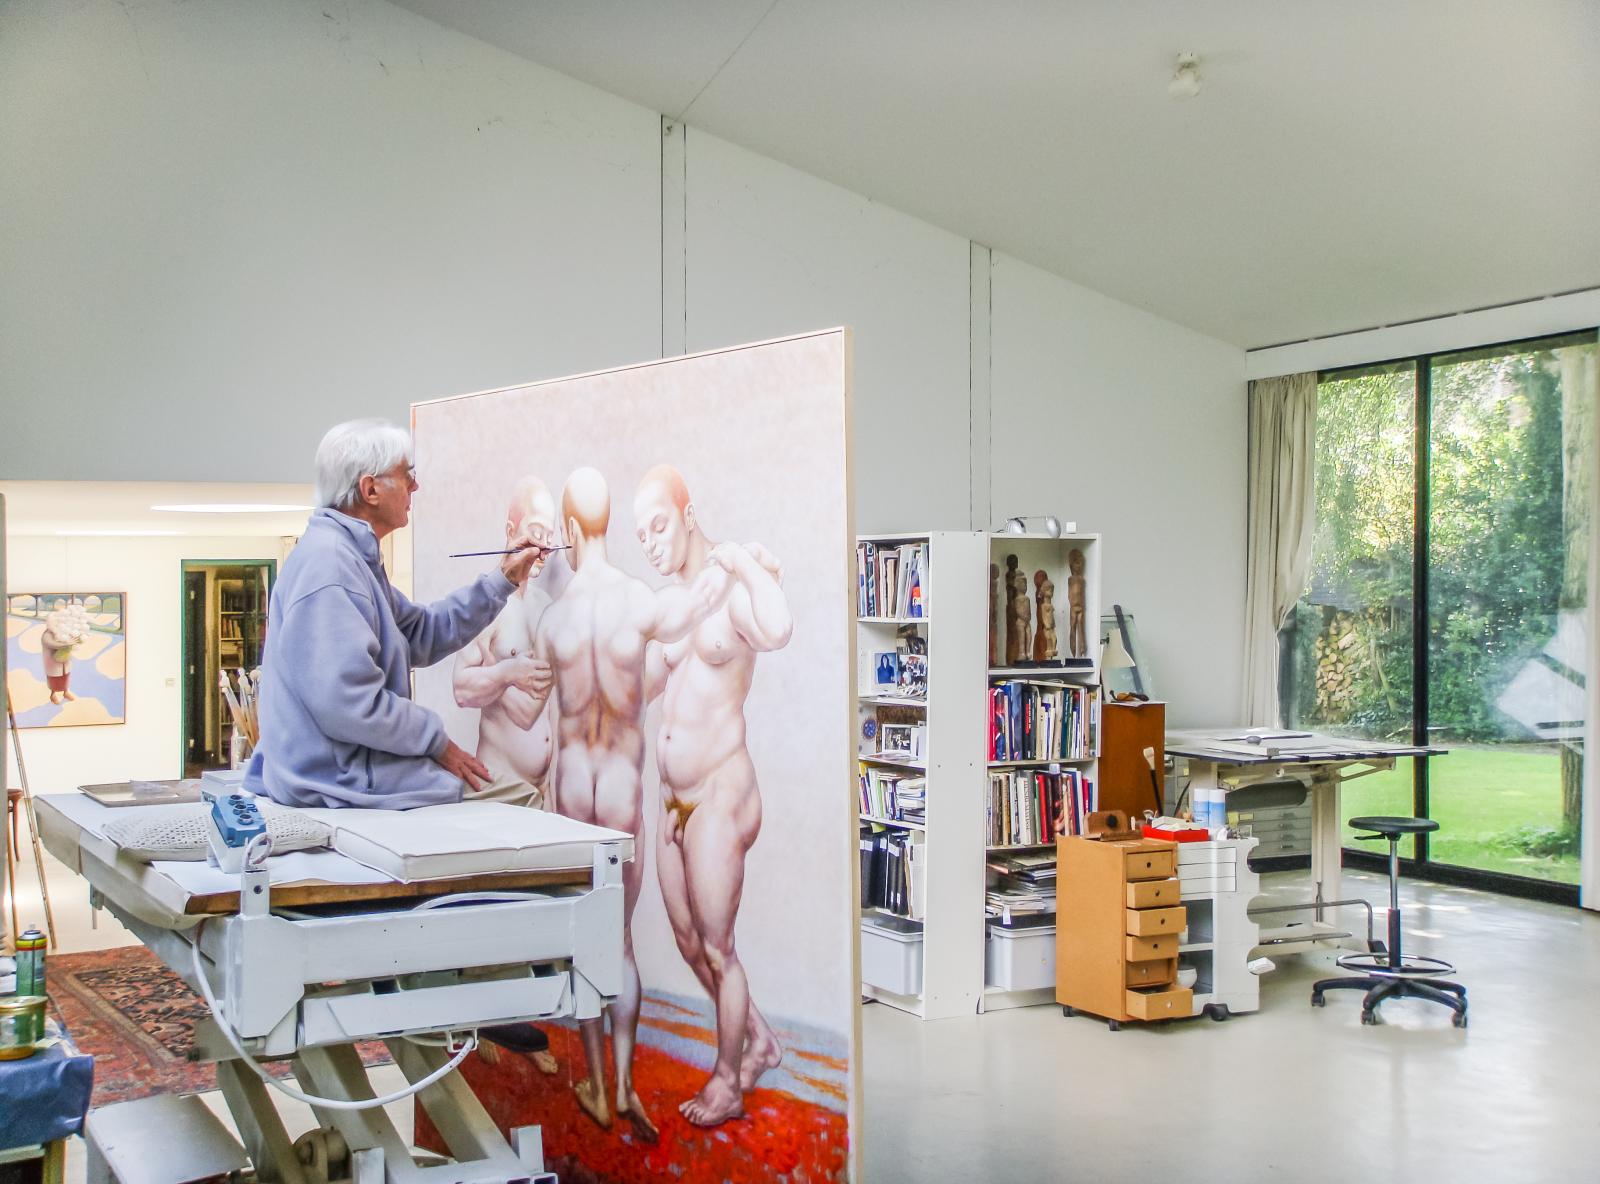 Herman Gordijn at work in his studio at Terschuur - Barneveld (NL)